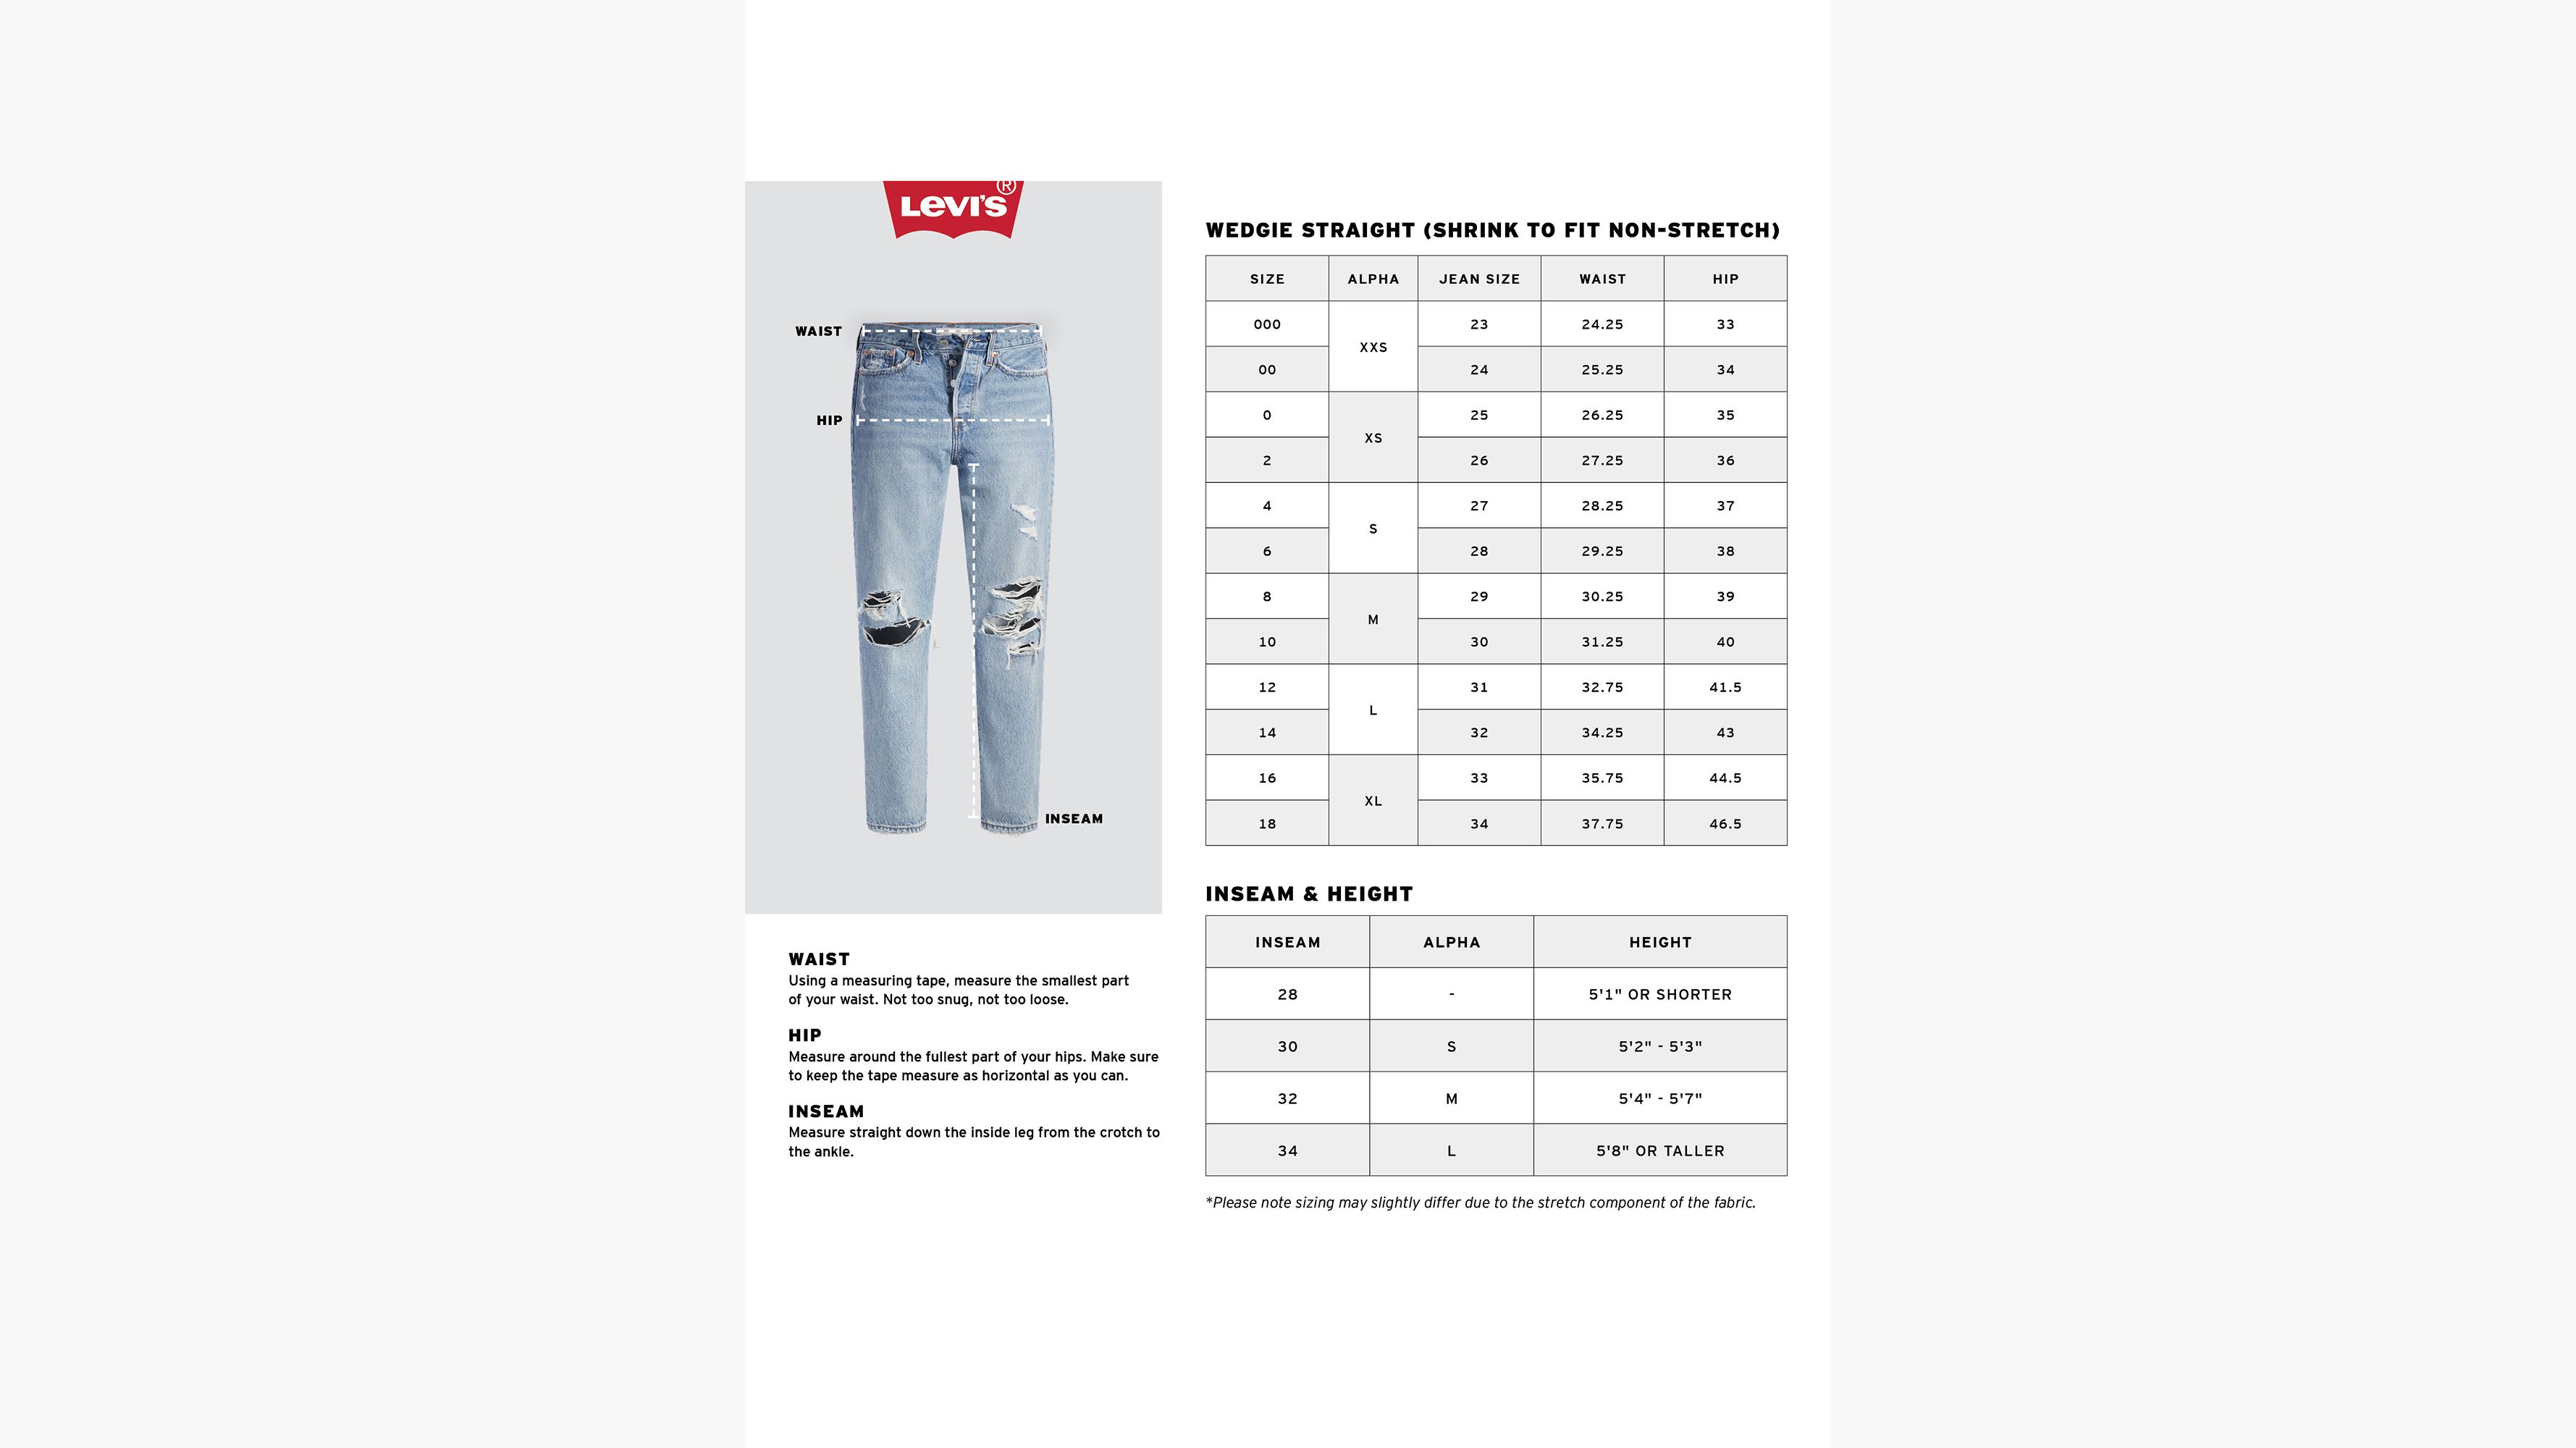 women jeans size chart conversion, denim love, pinterest